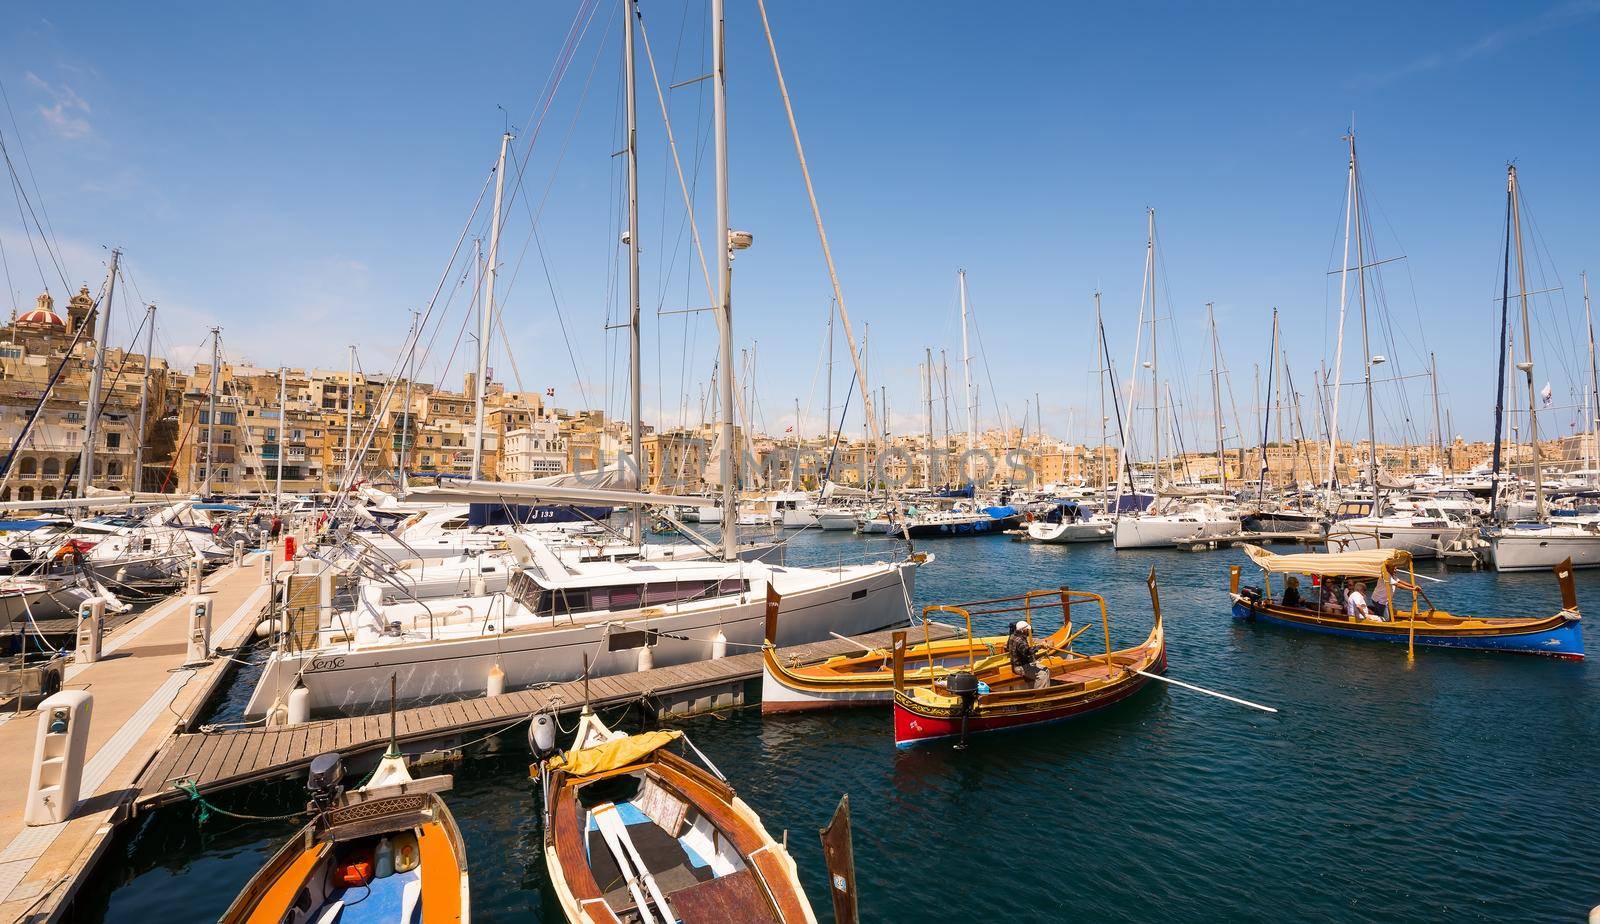 Valletta, Malta - 25 May 2015: many yachts and boats in tha bay near Valletta pot in Malta